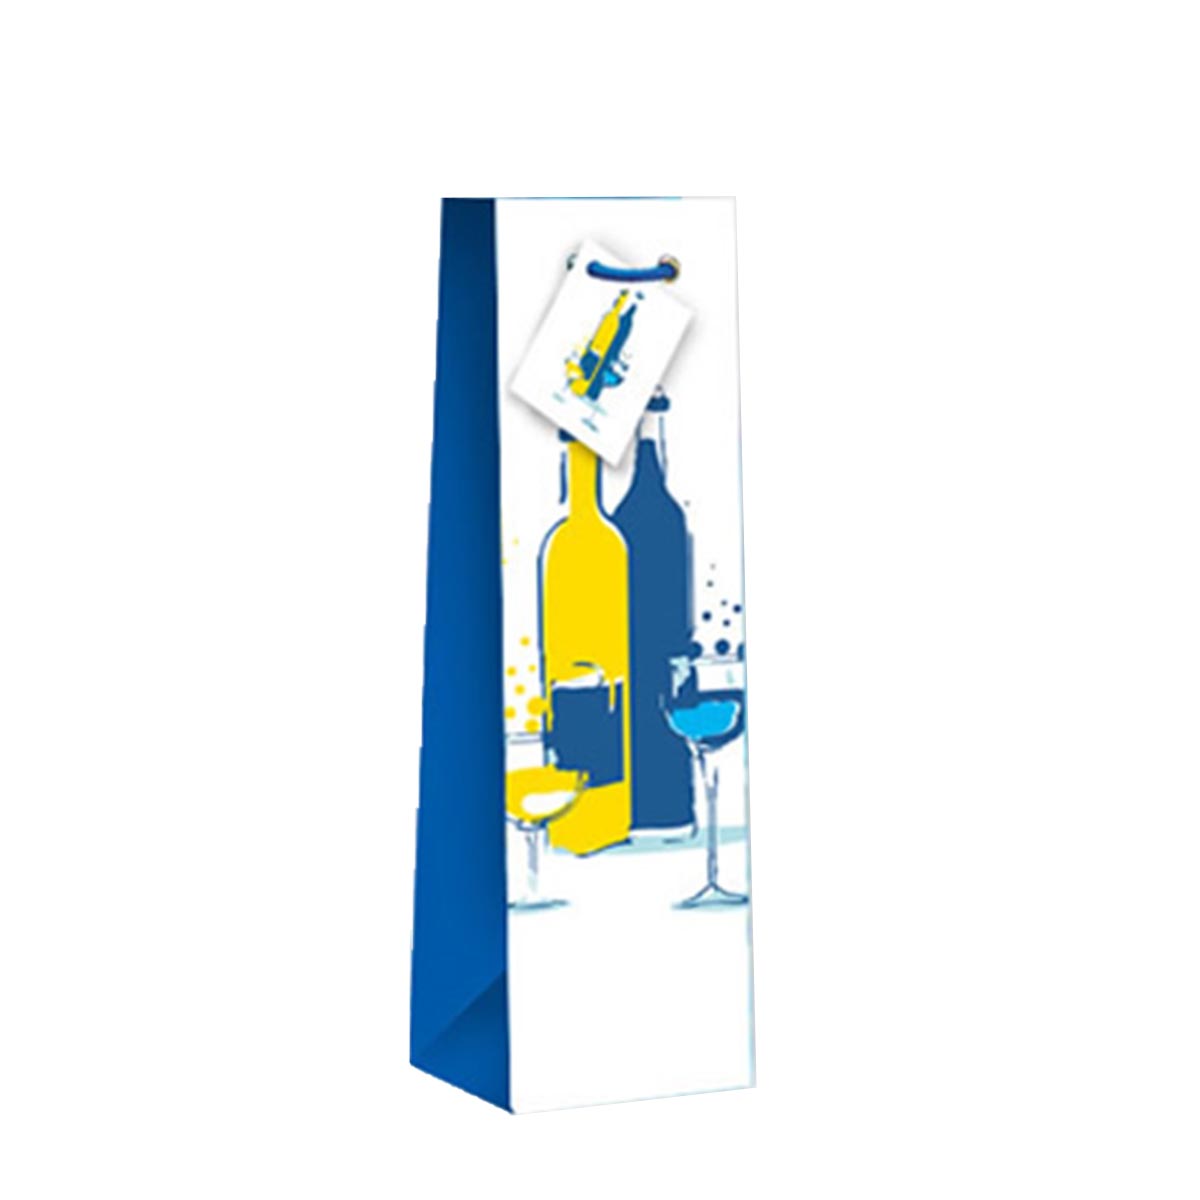 Presentpåse vinflaska blå/gul flaskor 1 st